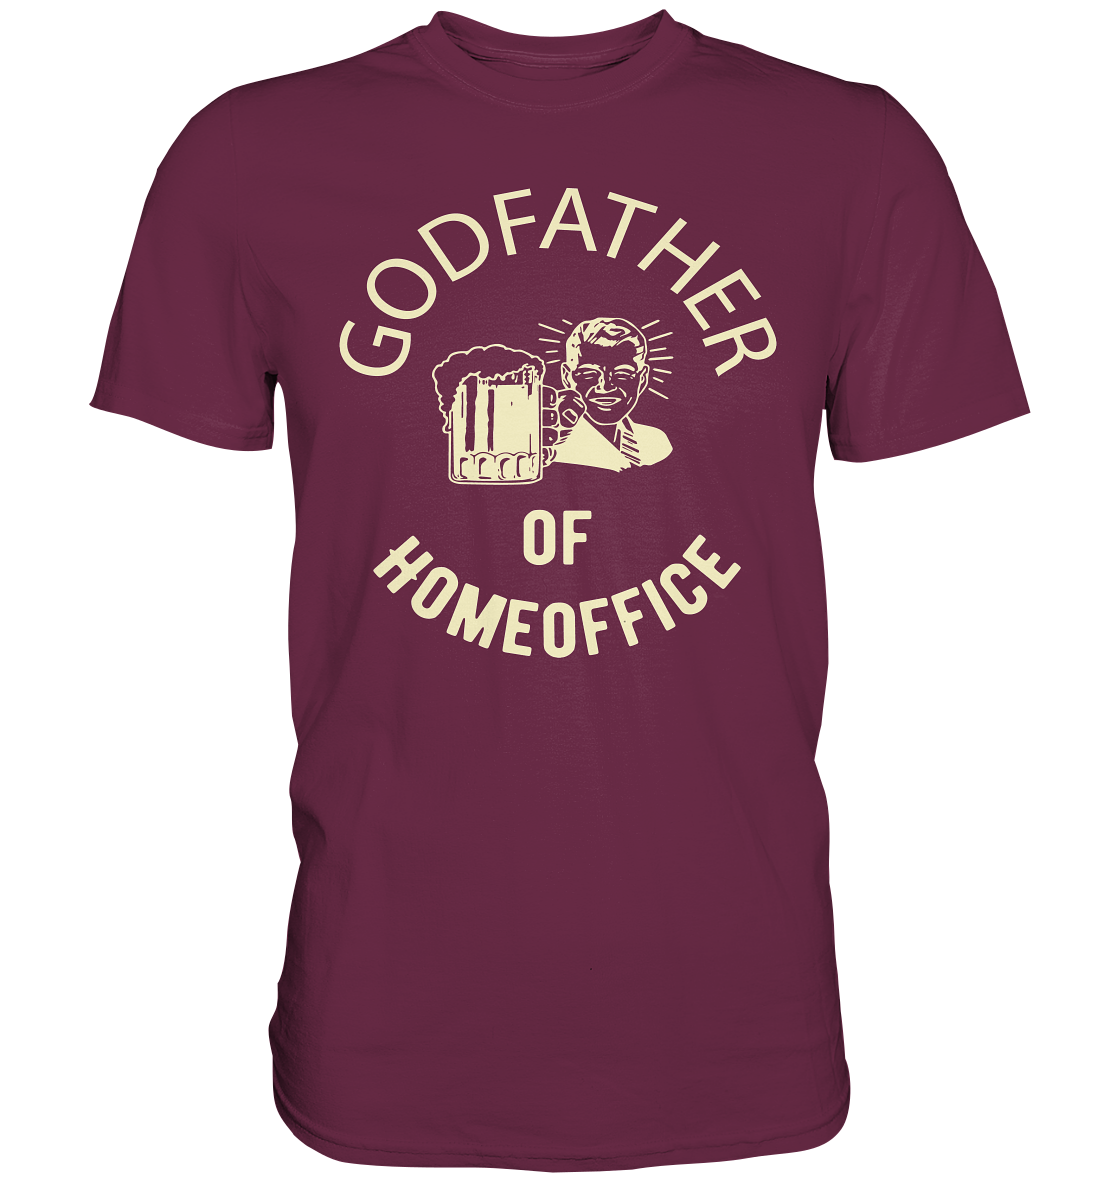 Godfather of Homeoffice - Premium Shirt